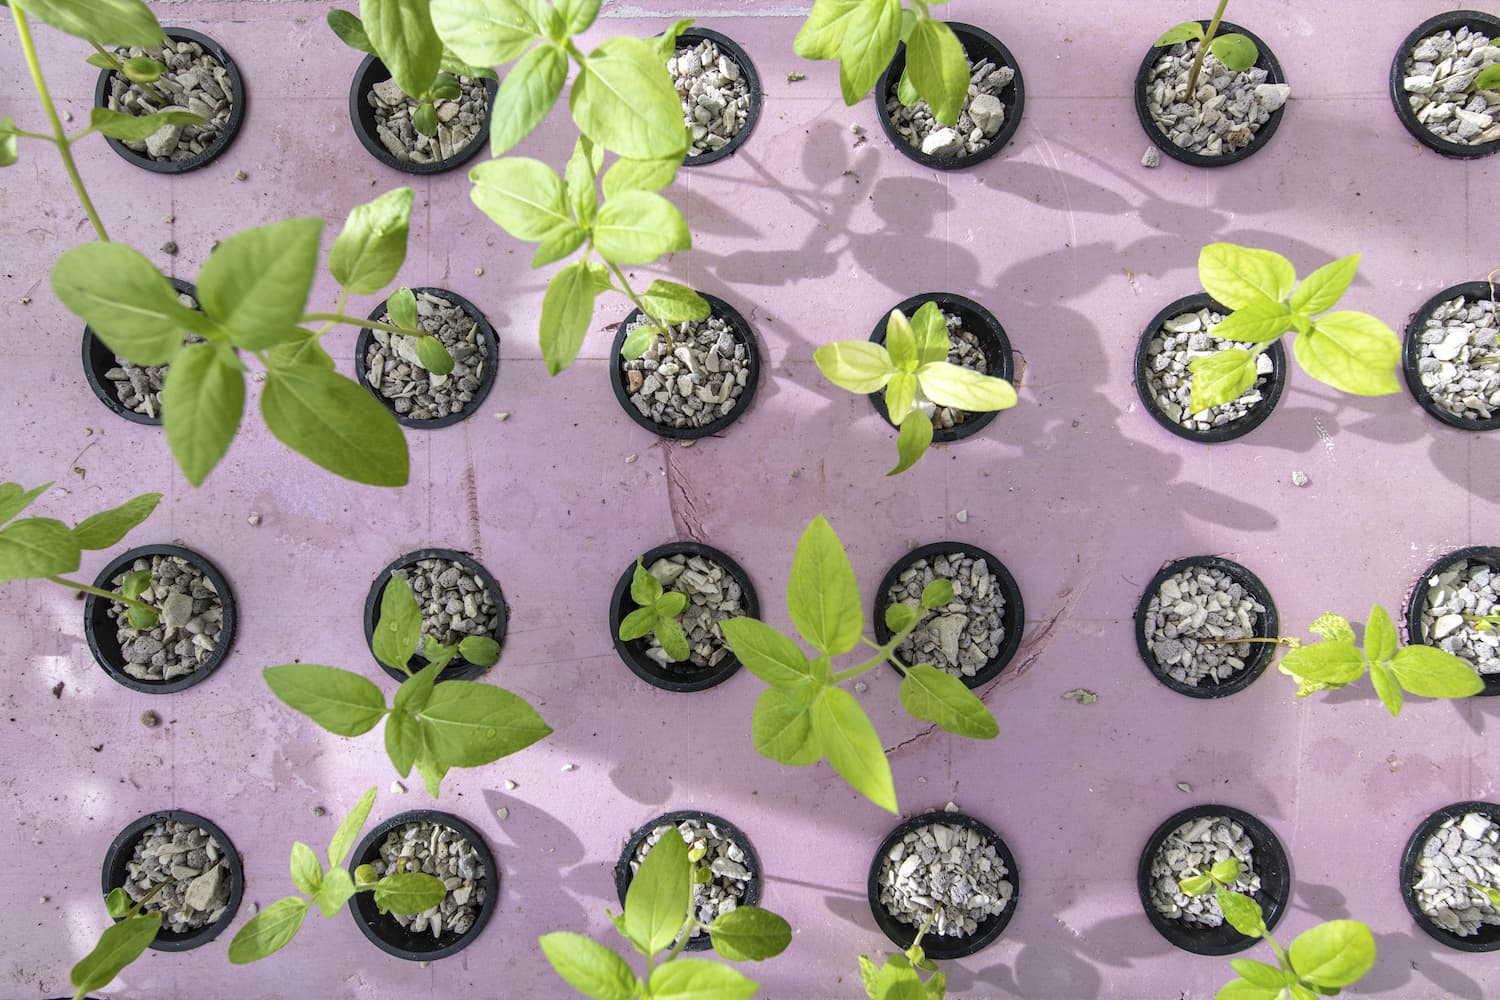 What garden plants grow hydroponic